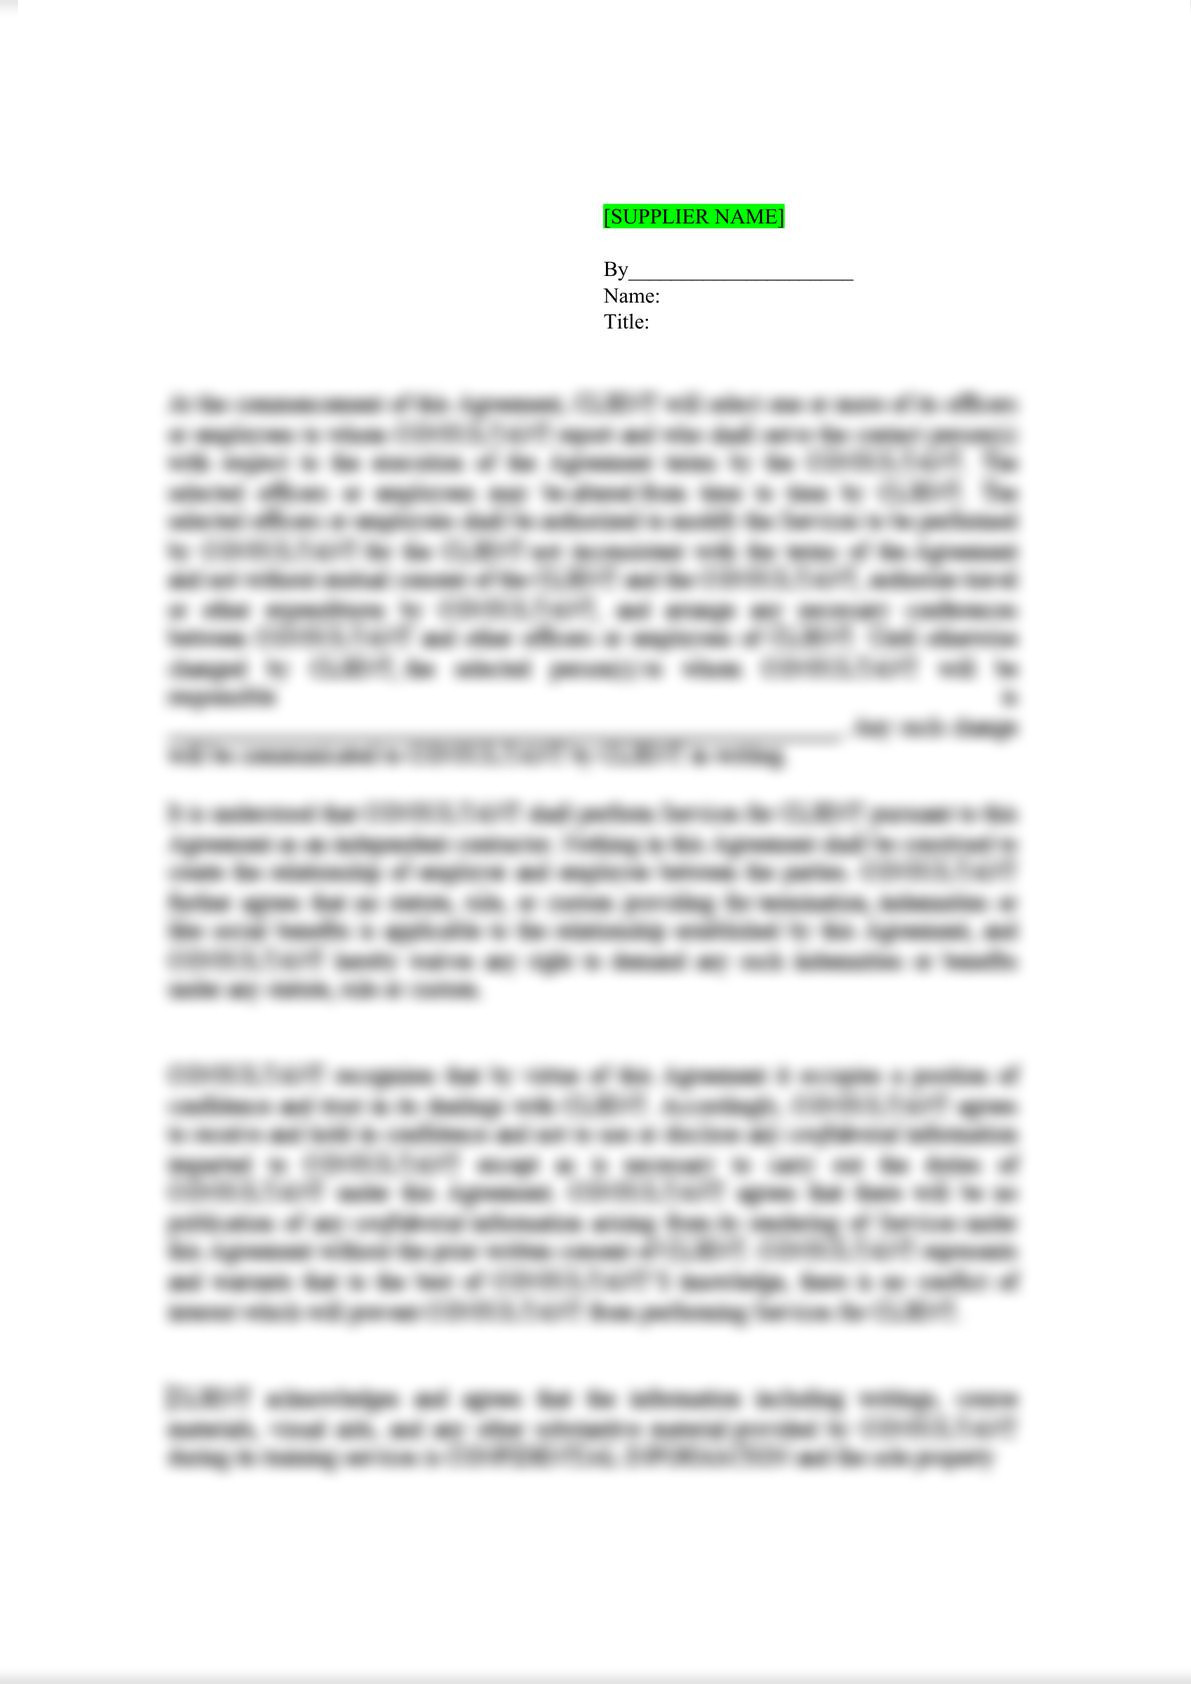 Sales Representative Agreement-5